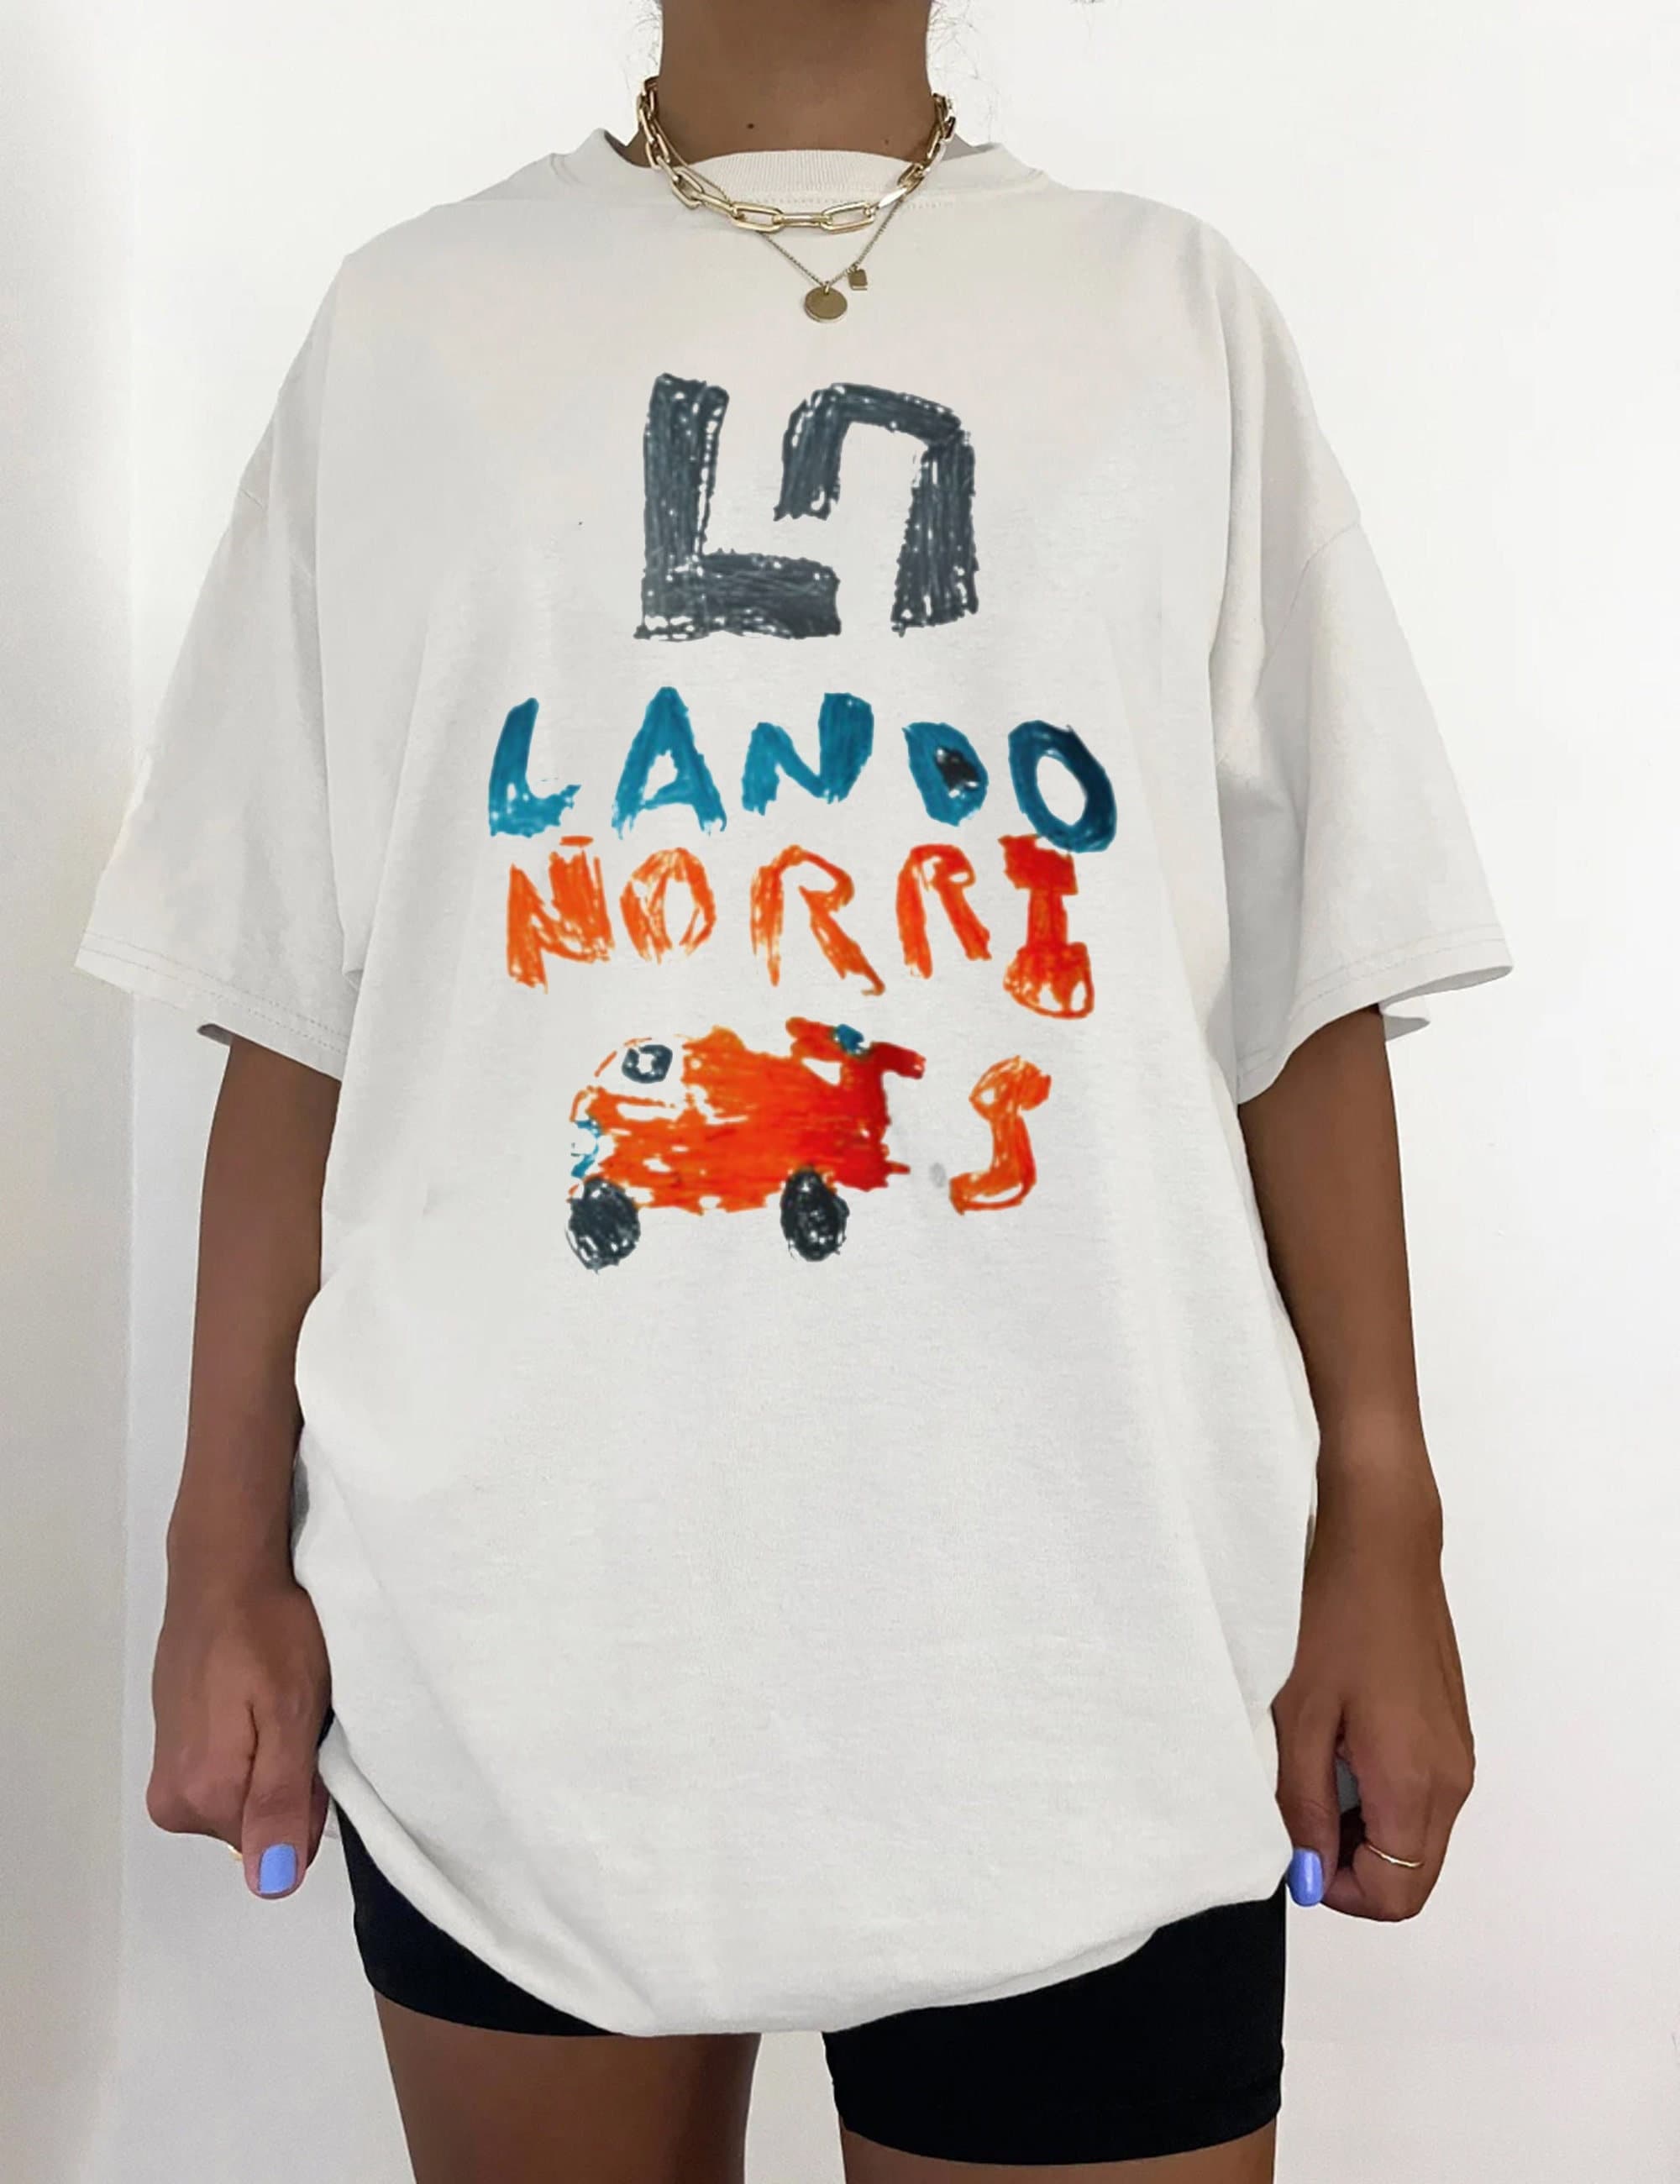 Discover Lando Norris Shirt, Lando Norris Meme Shirt, Formula One Tee, Lando Norris Racing Fan Lovers Unisex Shirt